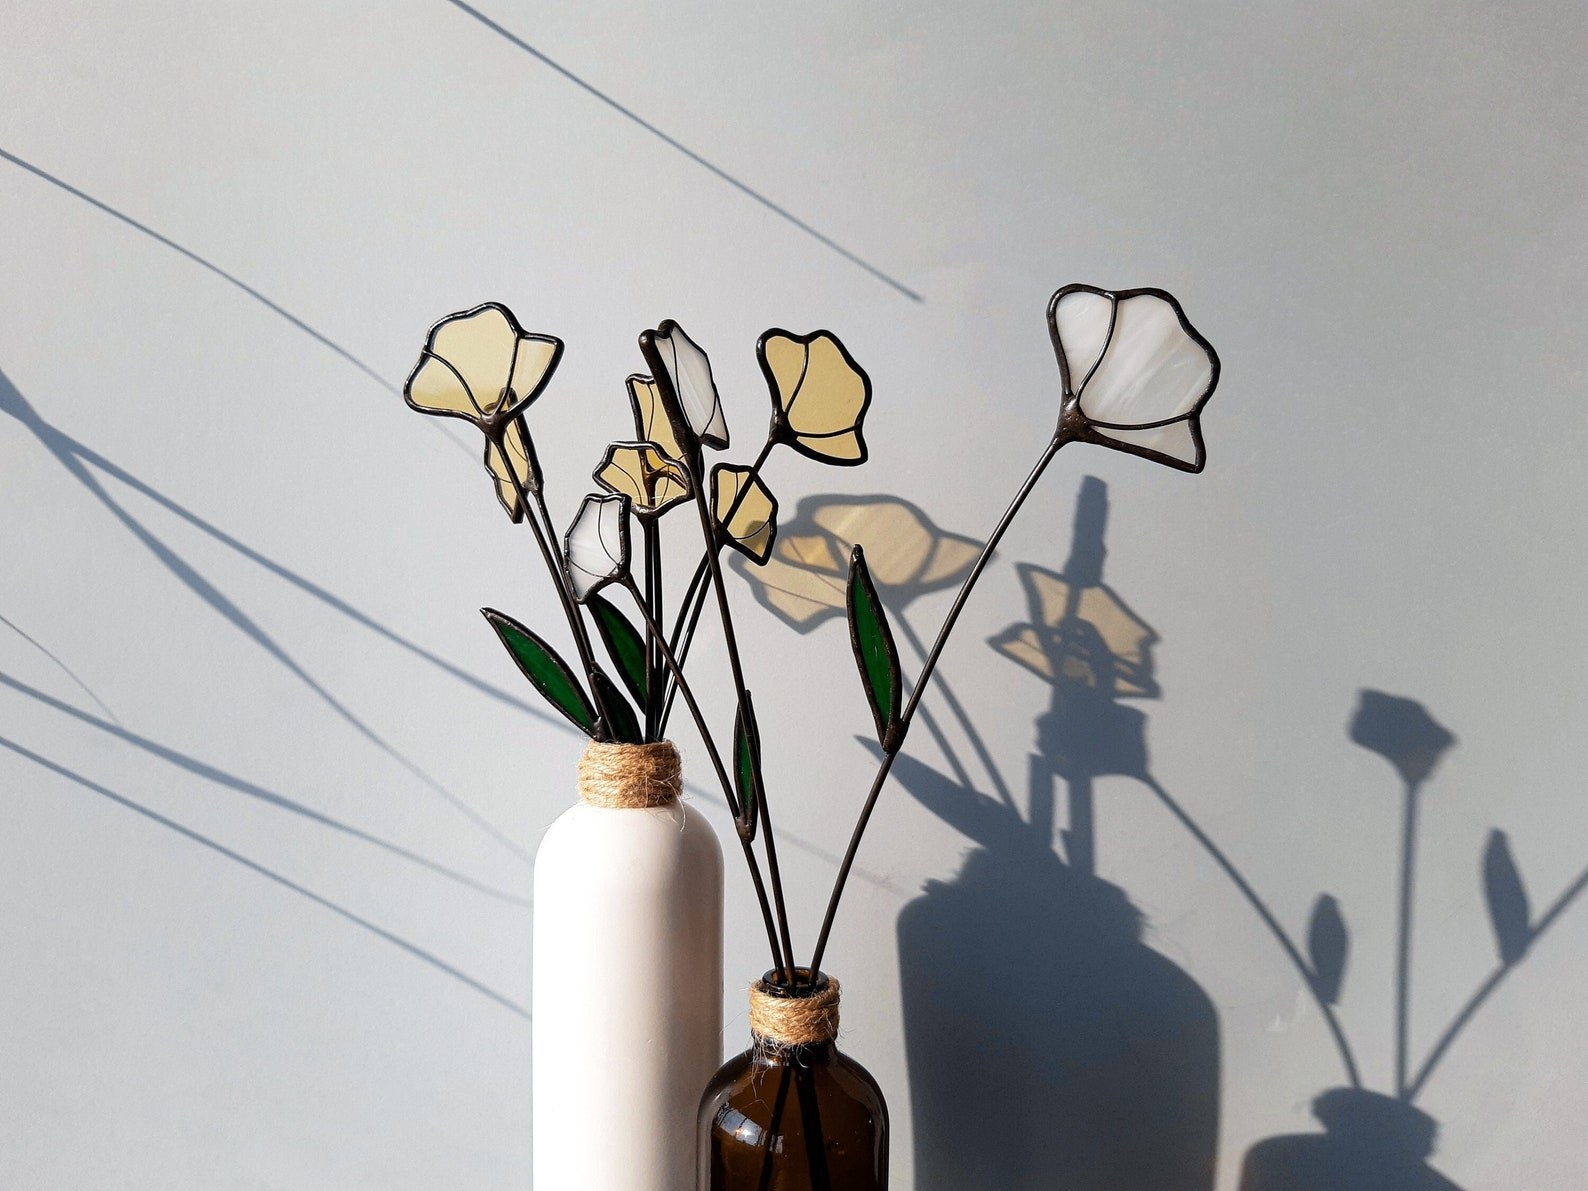 sculptural glass flowers in minimalist vases